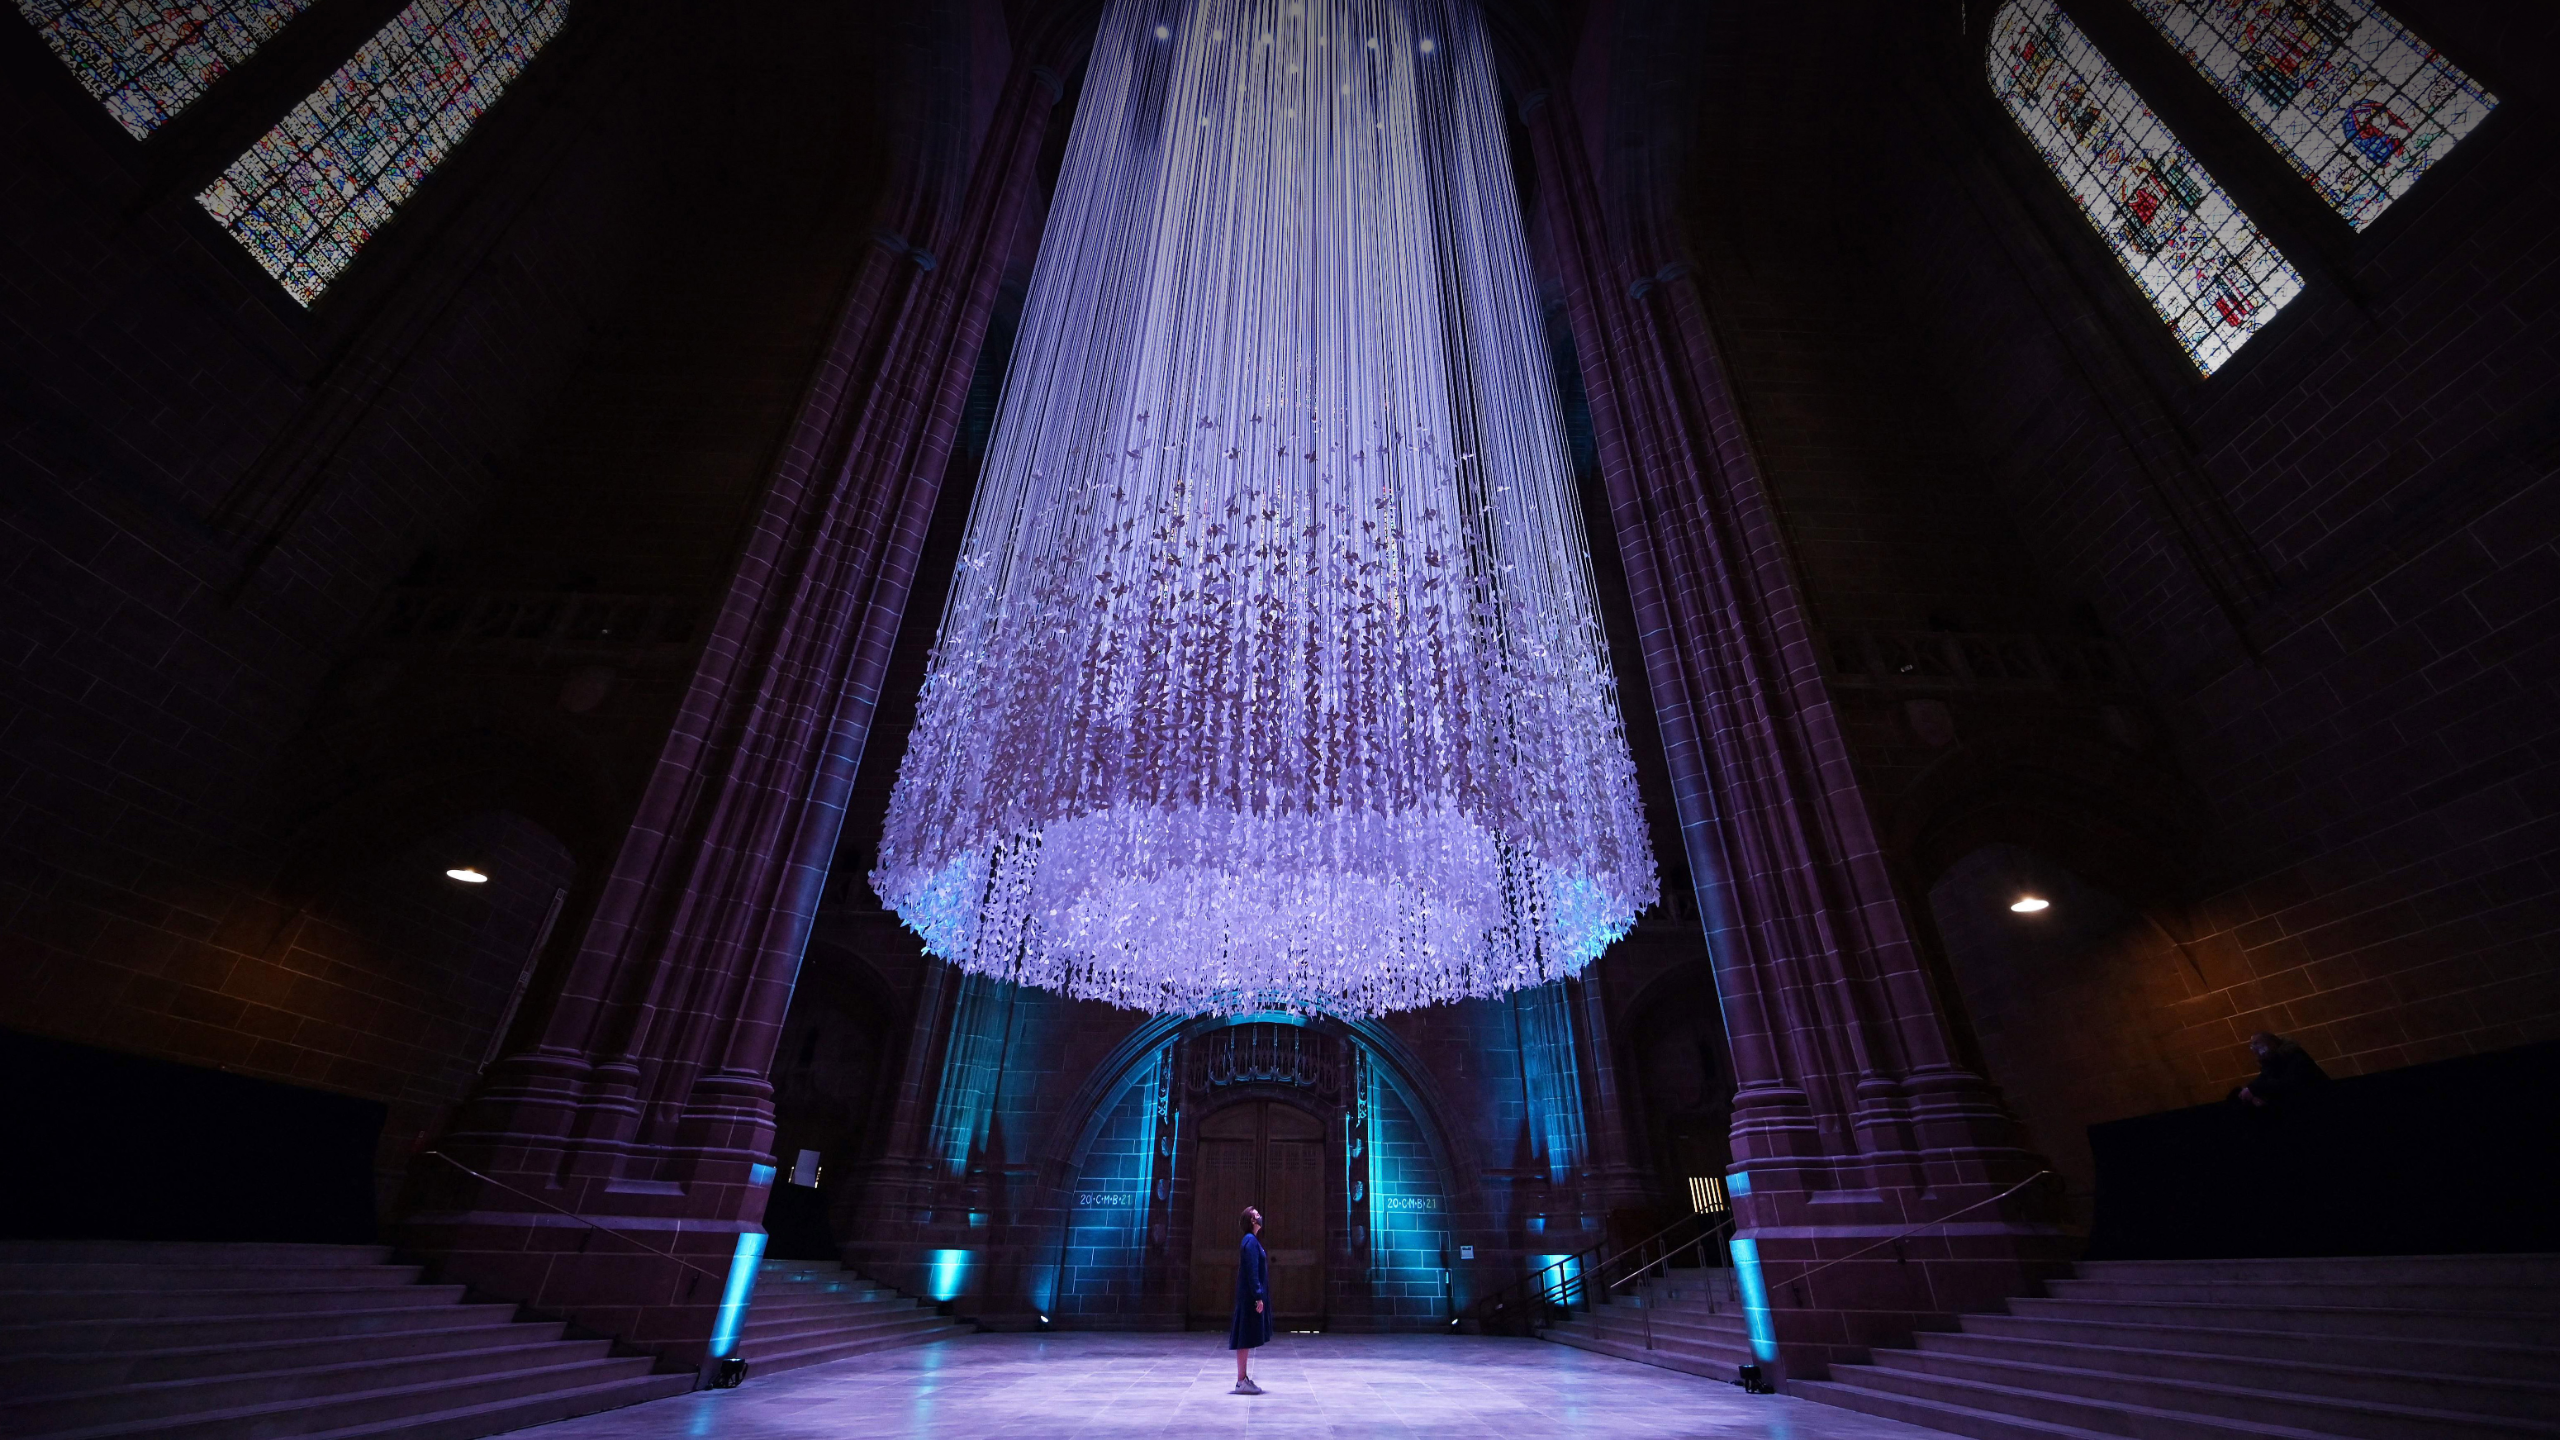 Architecture Door Interior Lights Chandeliers Liverpool England Cathedral 2560x1440